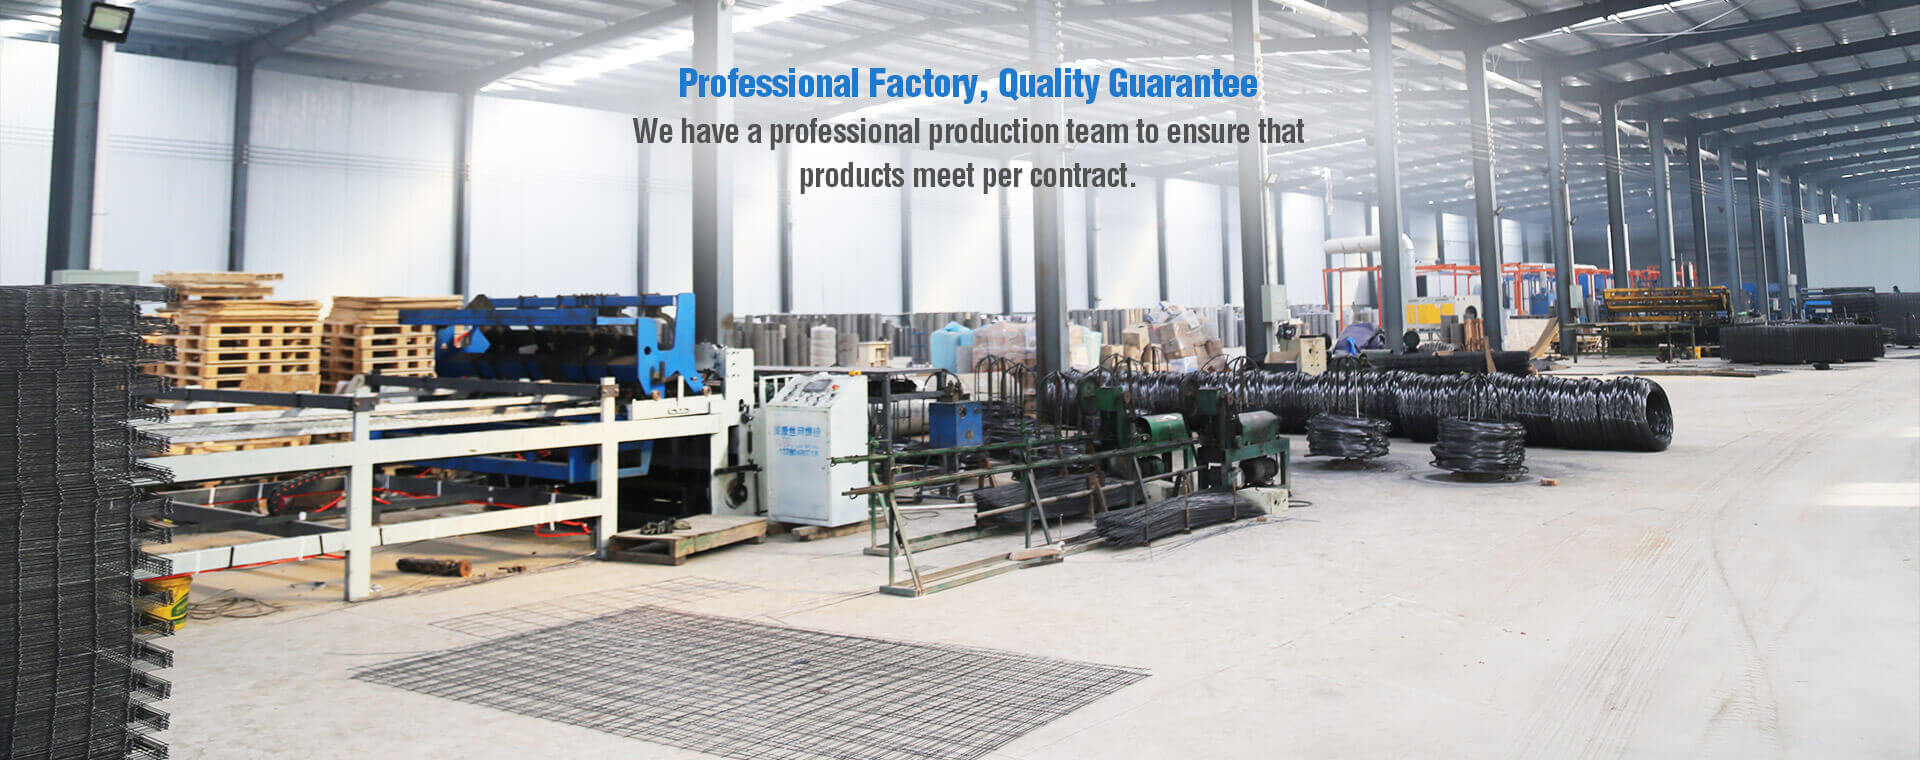 Professional Factory, Quality Guarantee